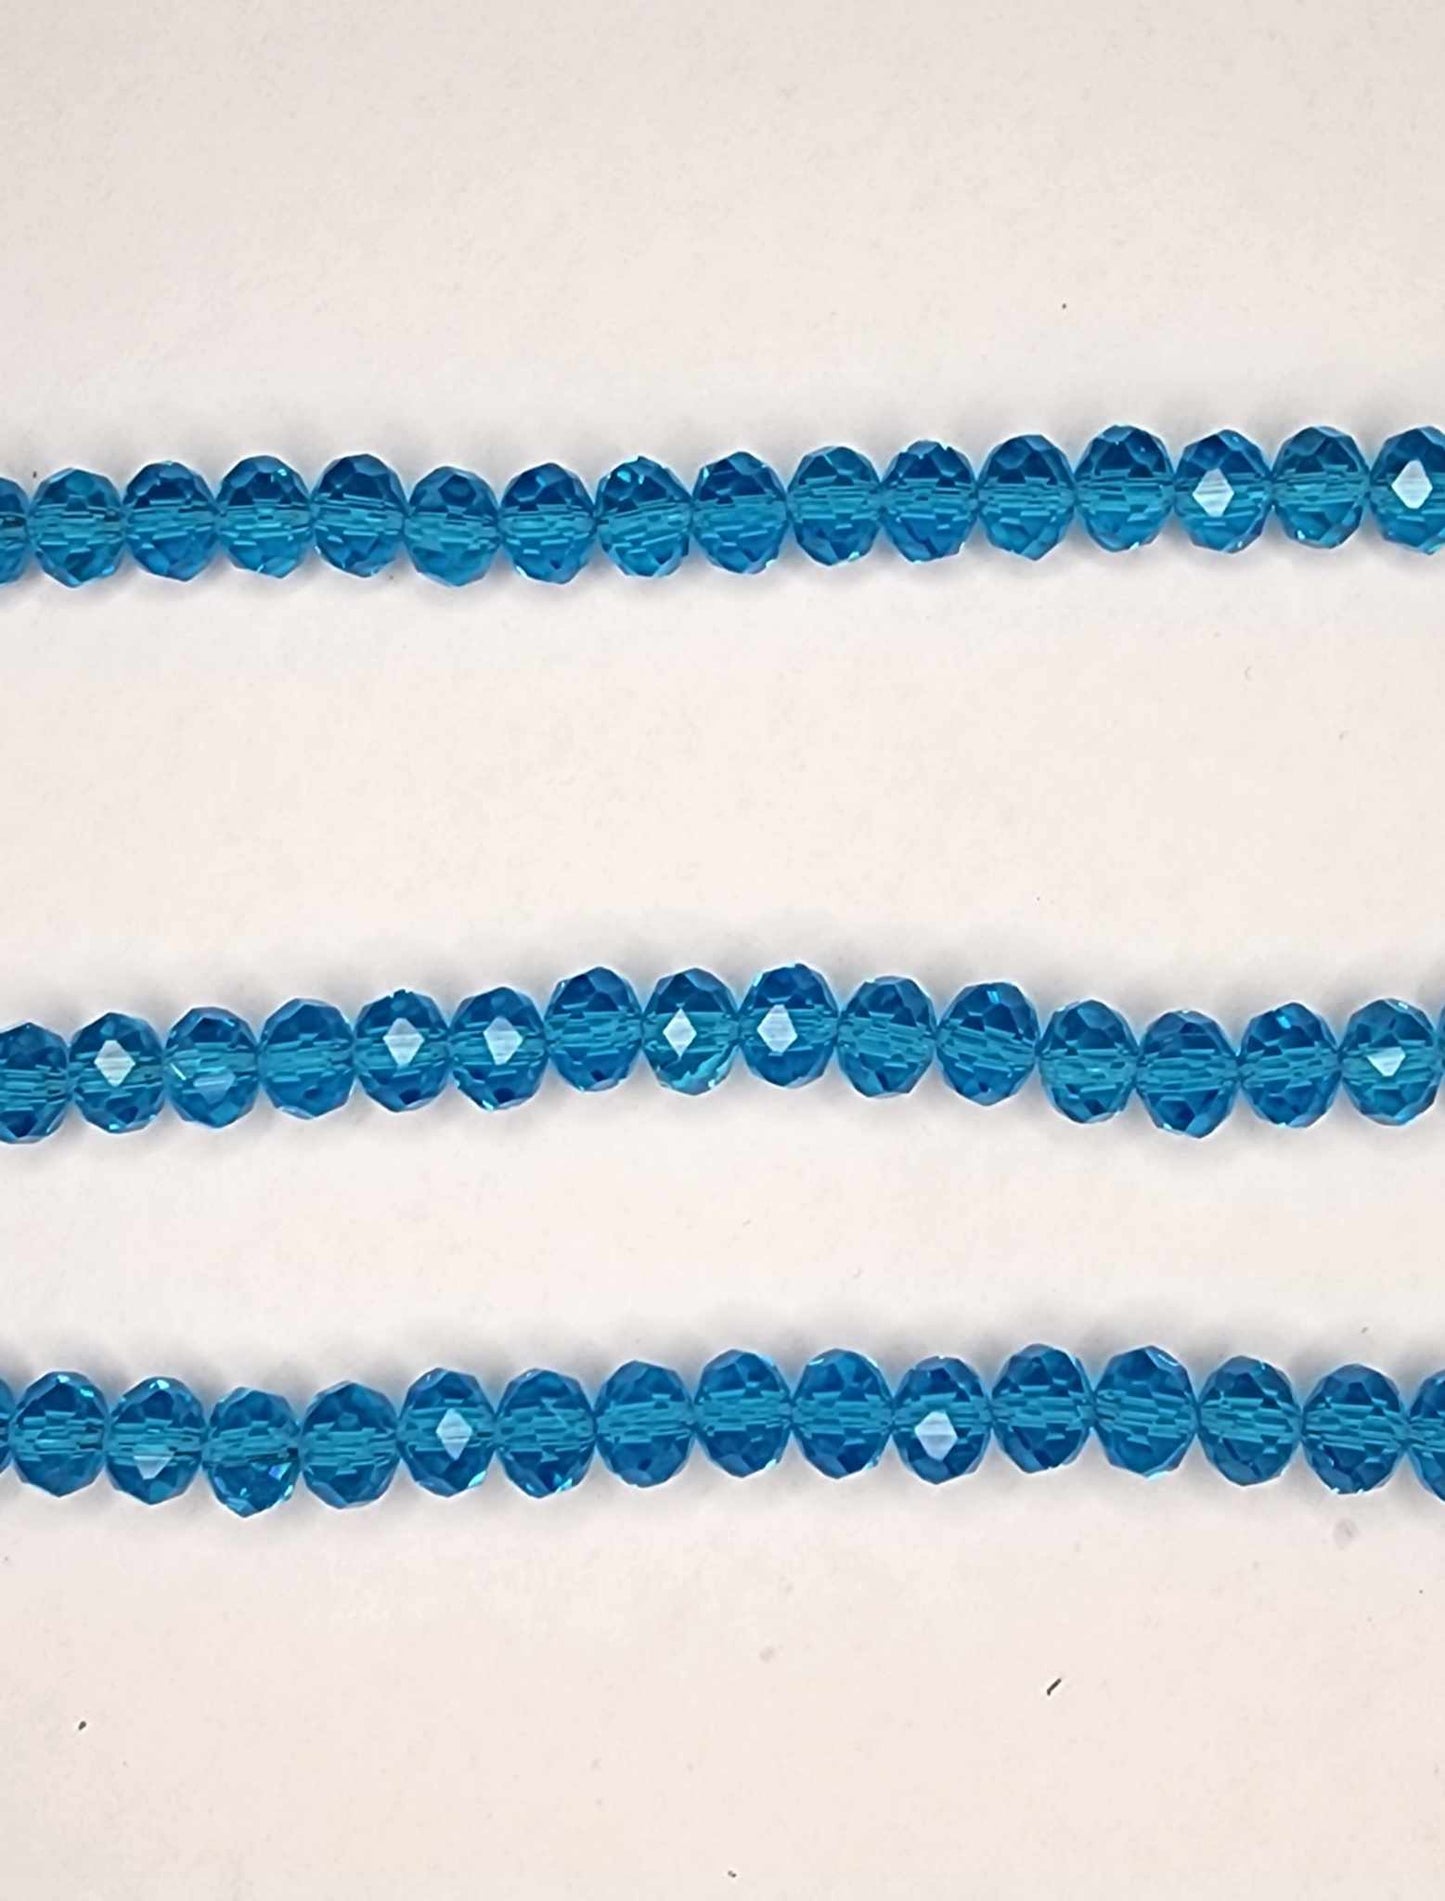 Aqua Strand of Glass beads